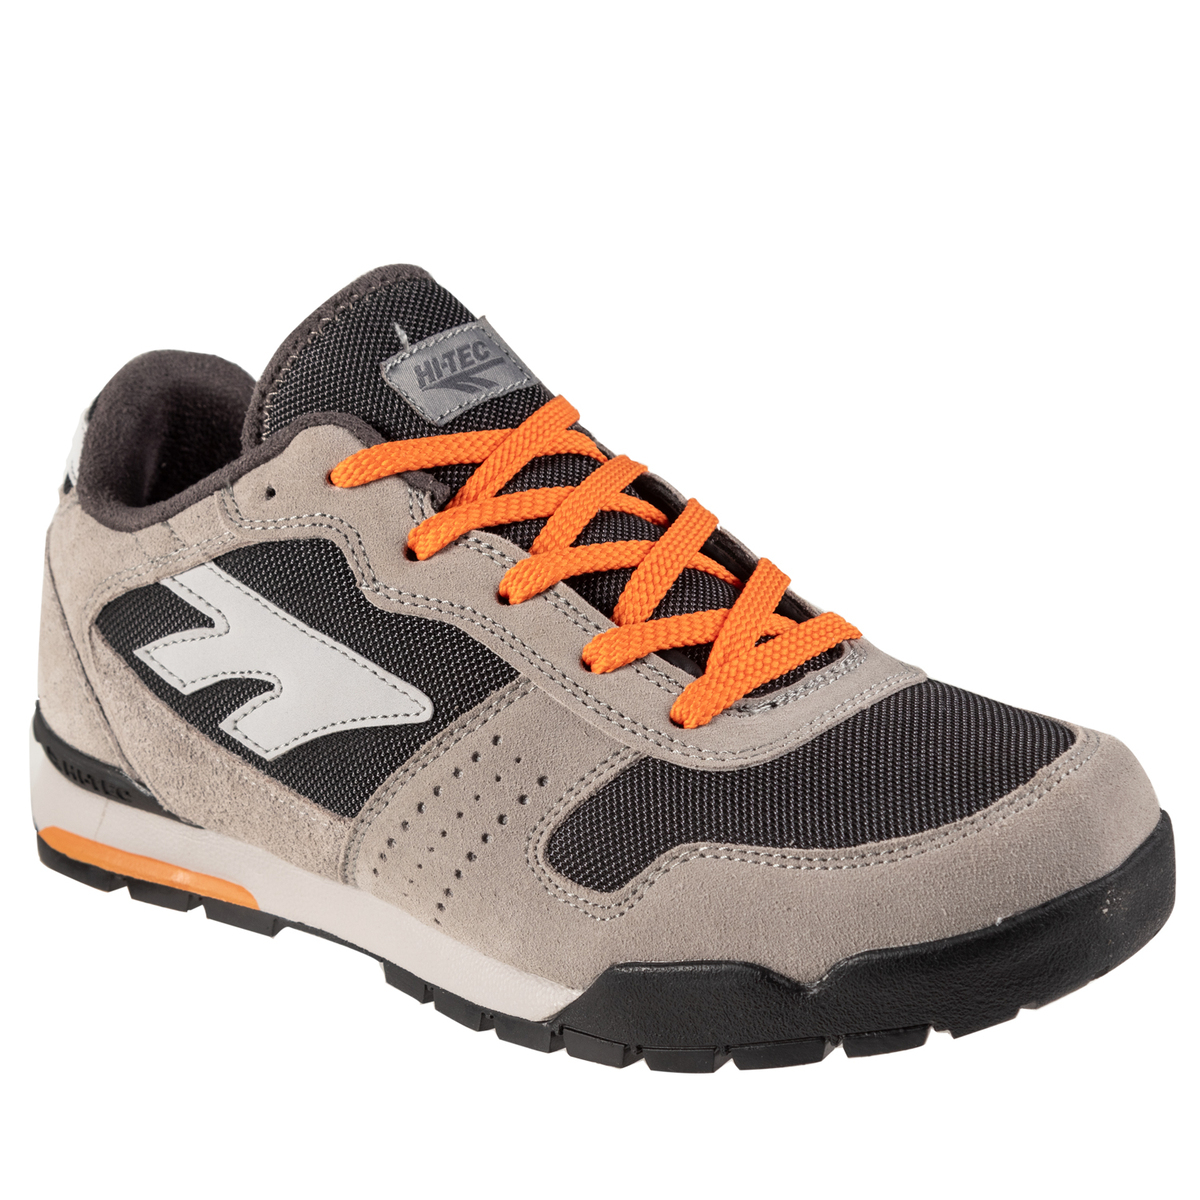 Hi-Tec Men's SL78 Low Hiking Shoes - Gray - Size 9 - Gray 9